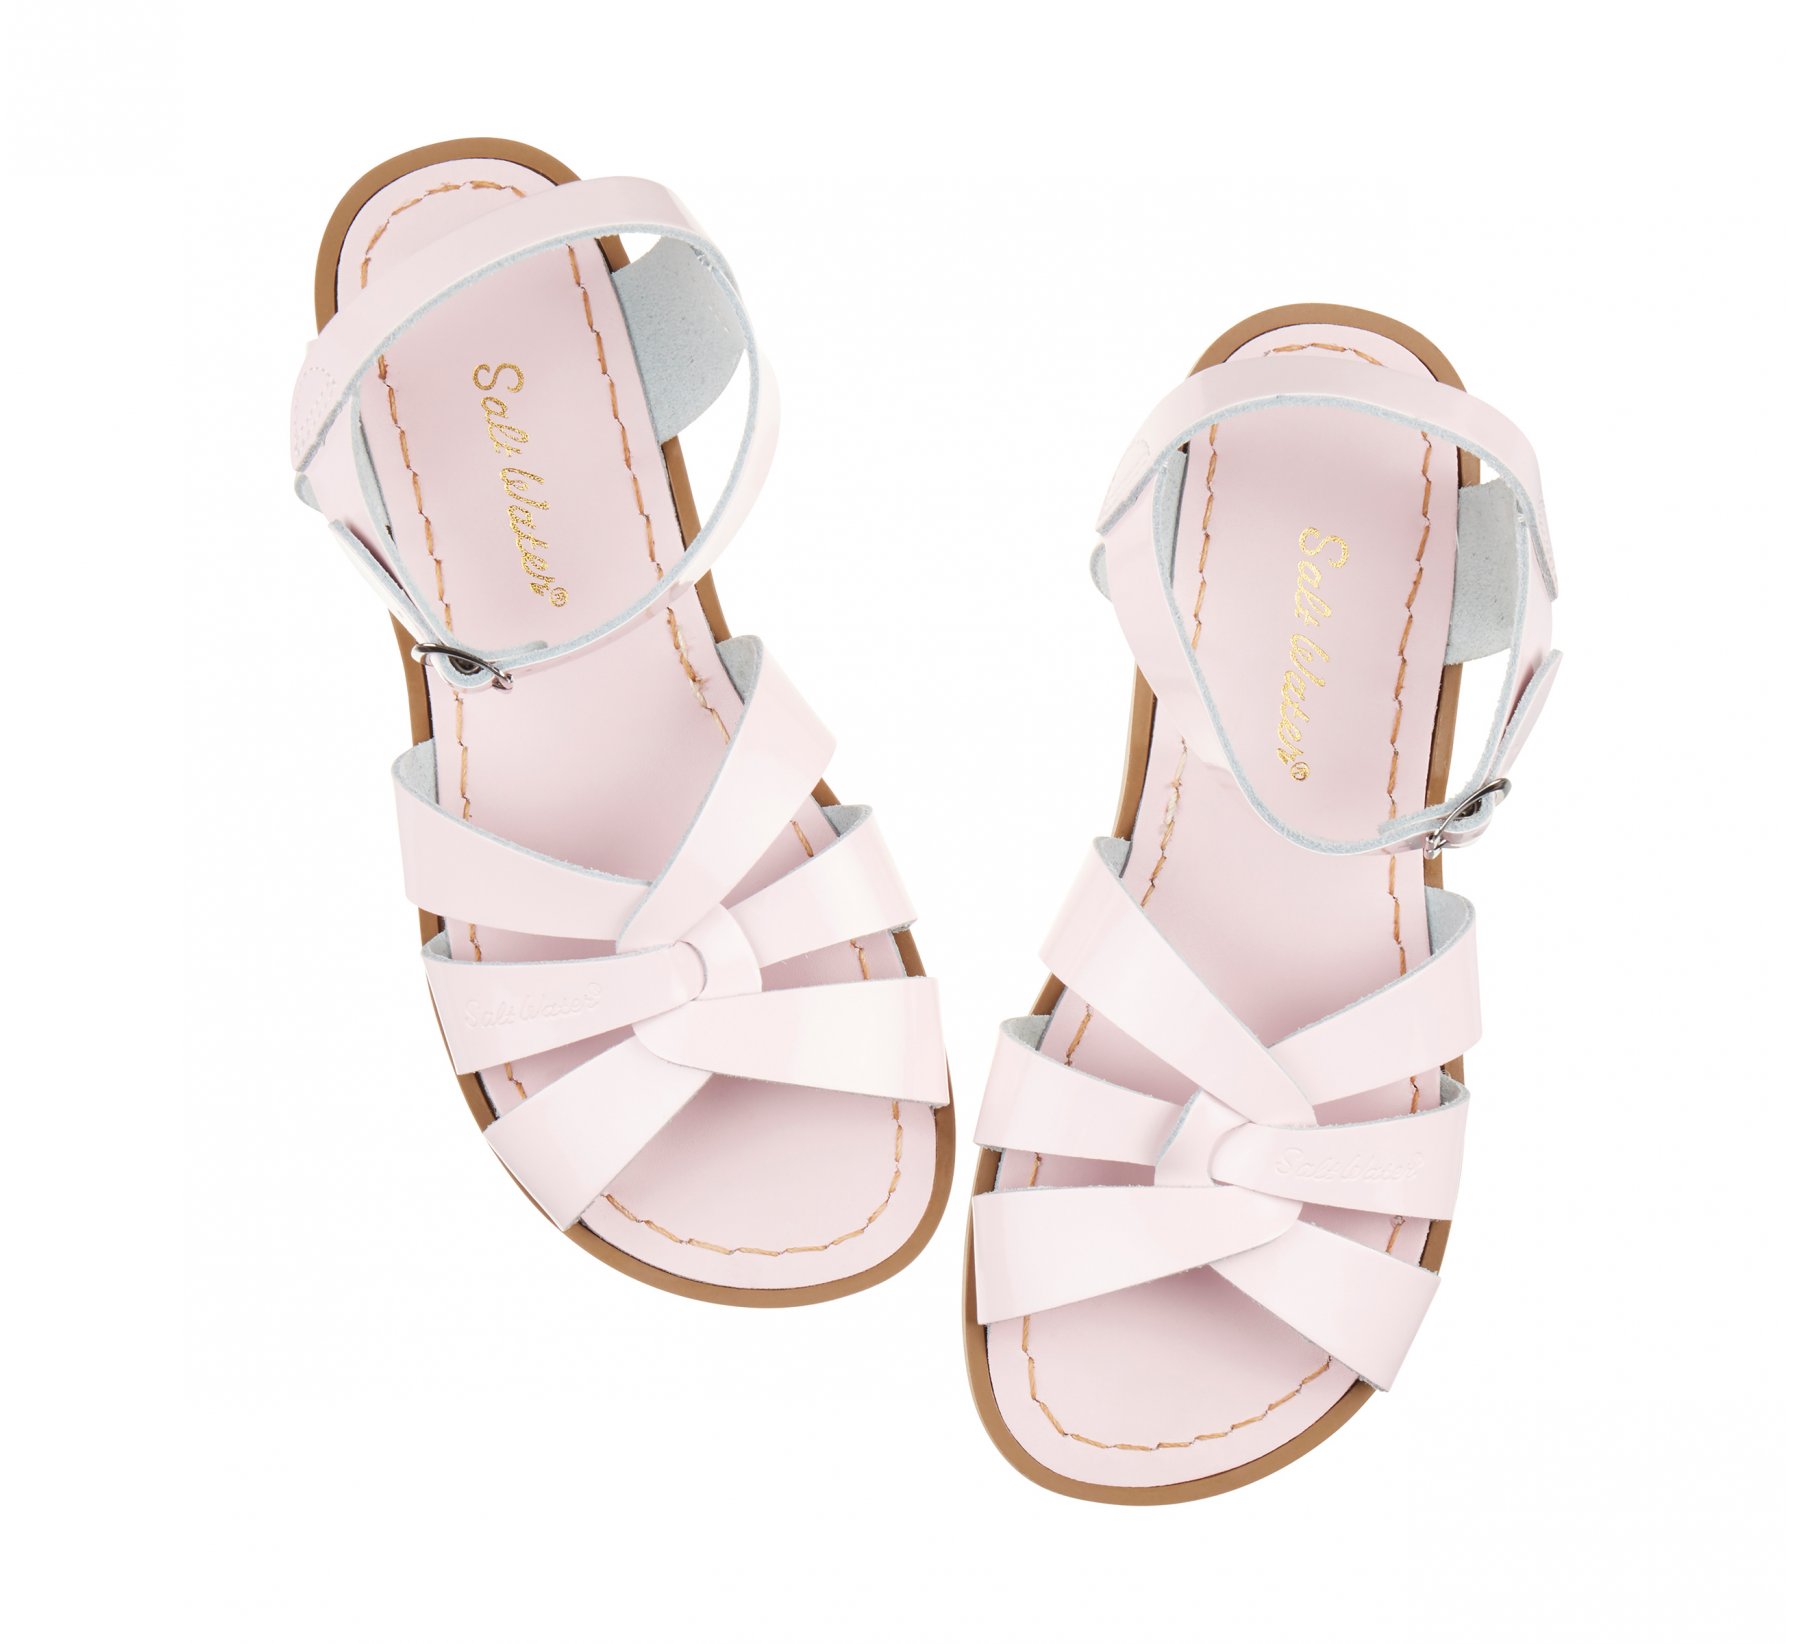 Original Shiny Pink Kids Sandals - Salt Water Sandals